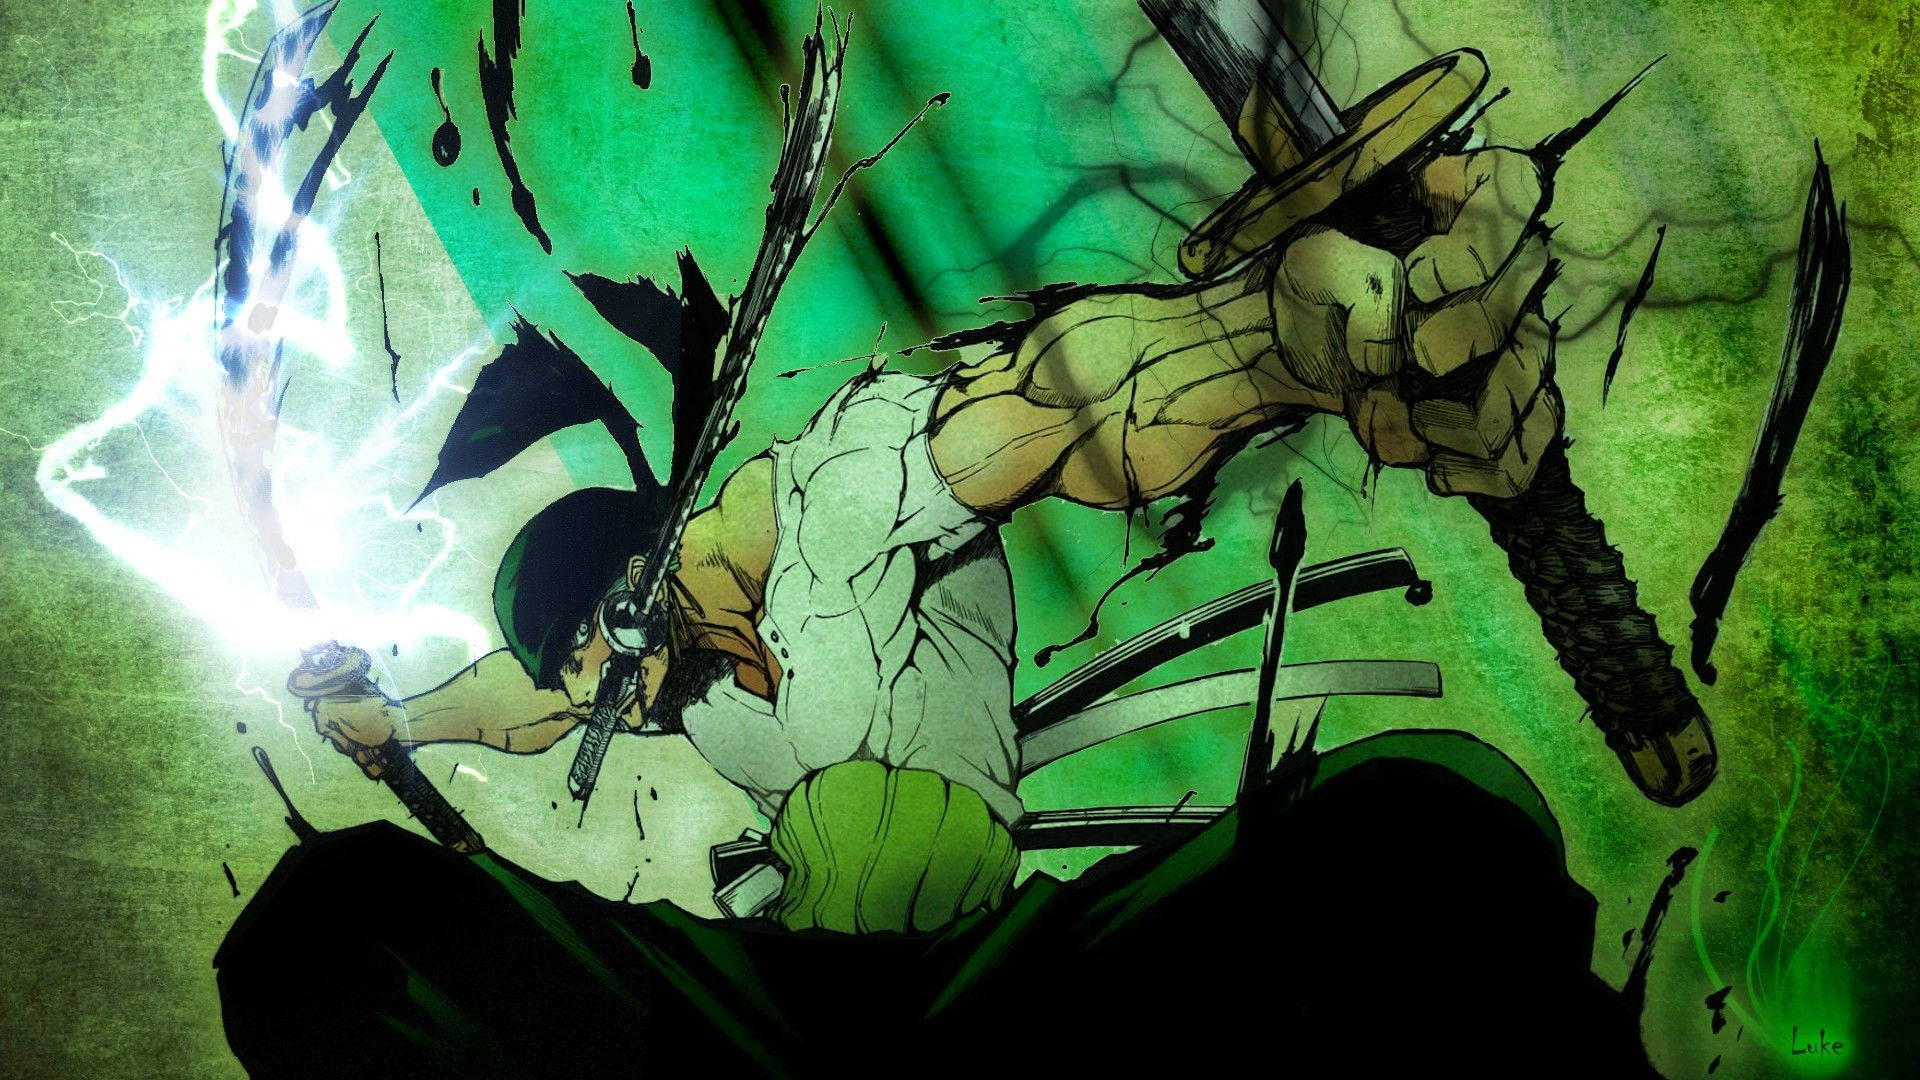 Zoro, the iconic swordsman of One Piece. Wallpaper